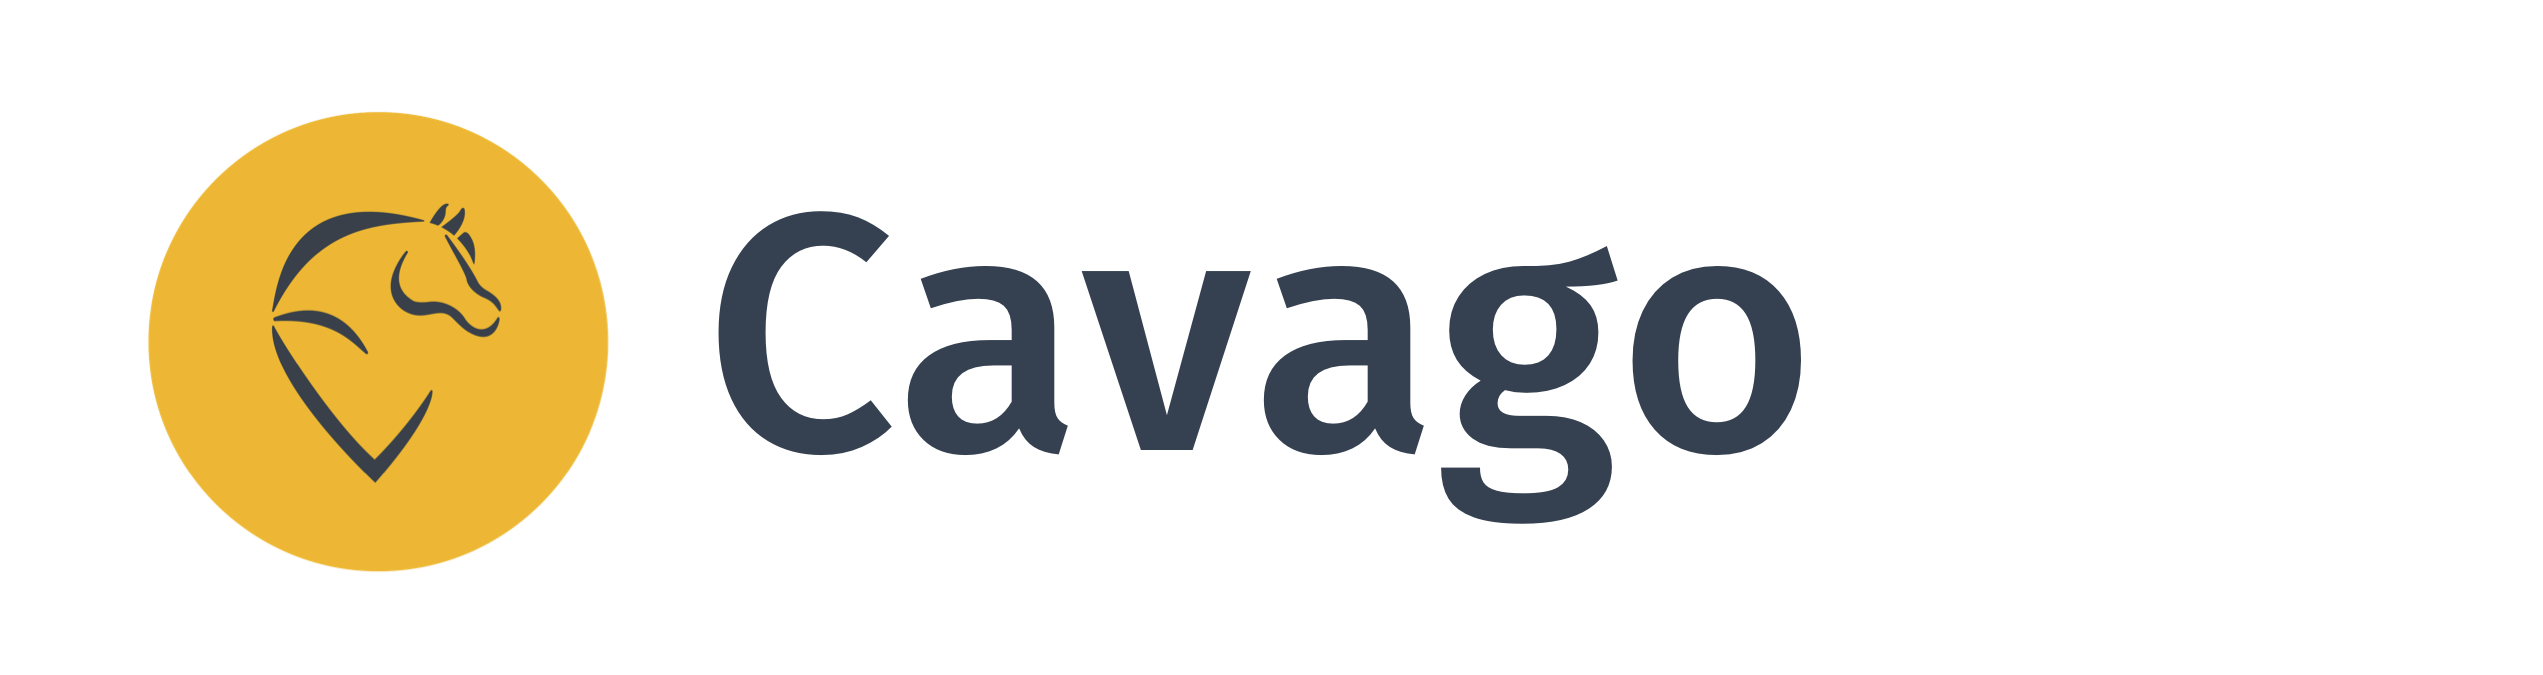 cavago-new-logo-1